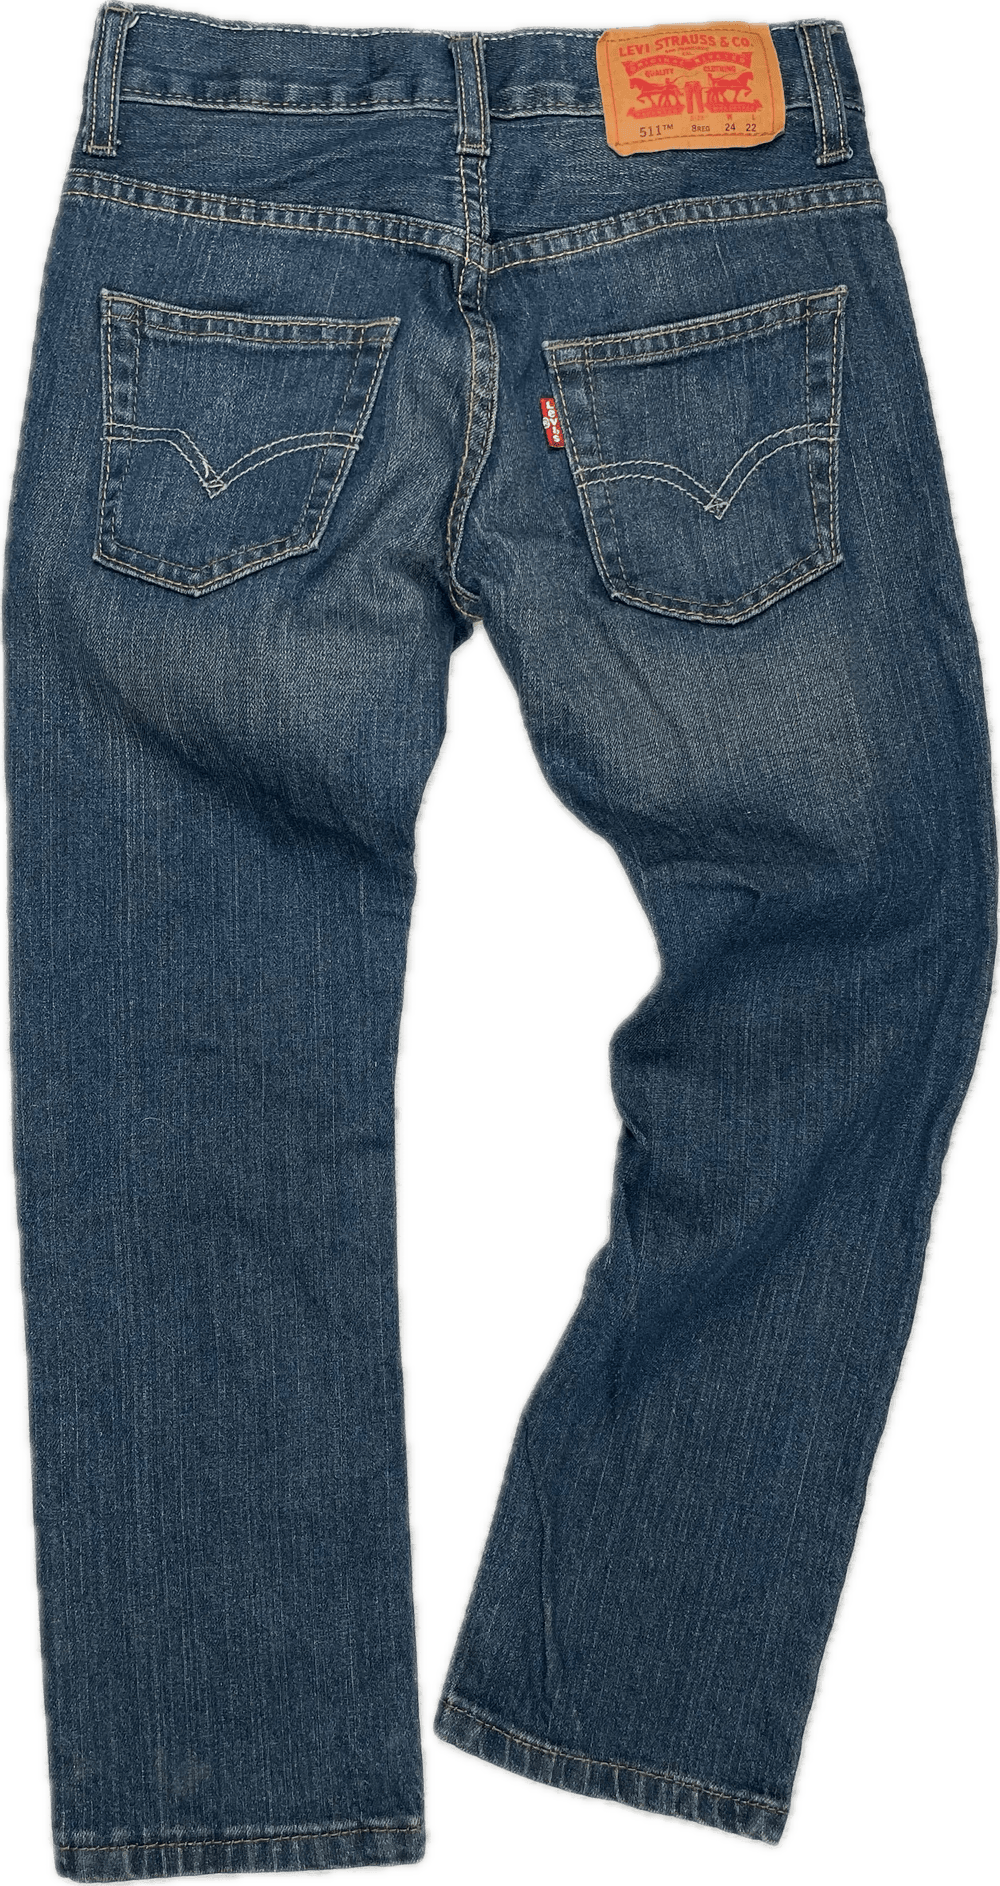 Levis Kids 511 Stretch Skinny Jeans - Size 8Y - Jean Pool